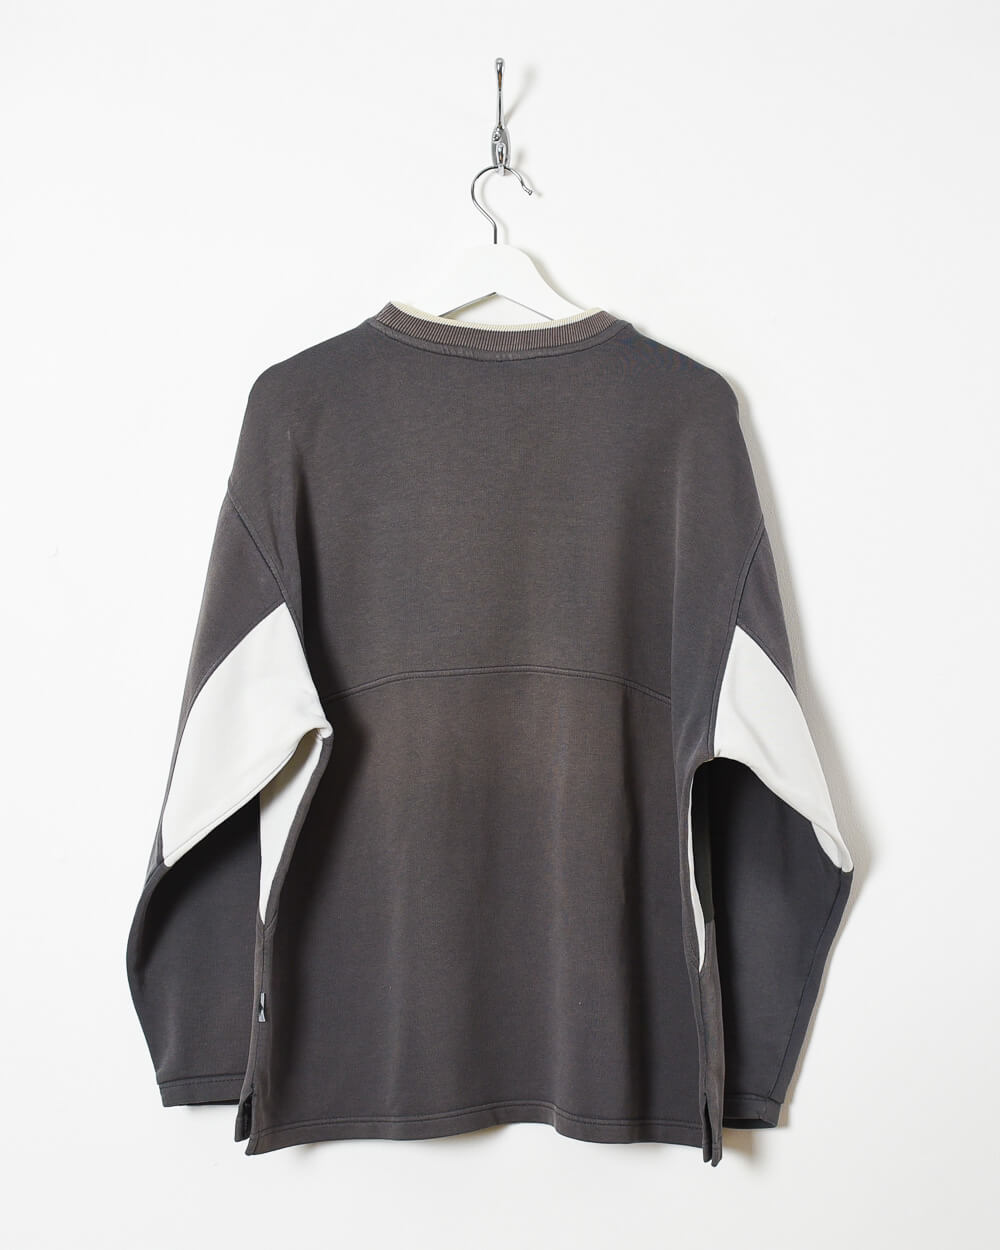 Grey Umbro Sweatshirt - Medium